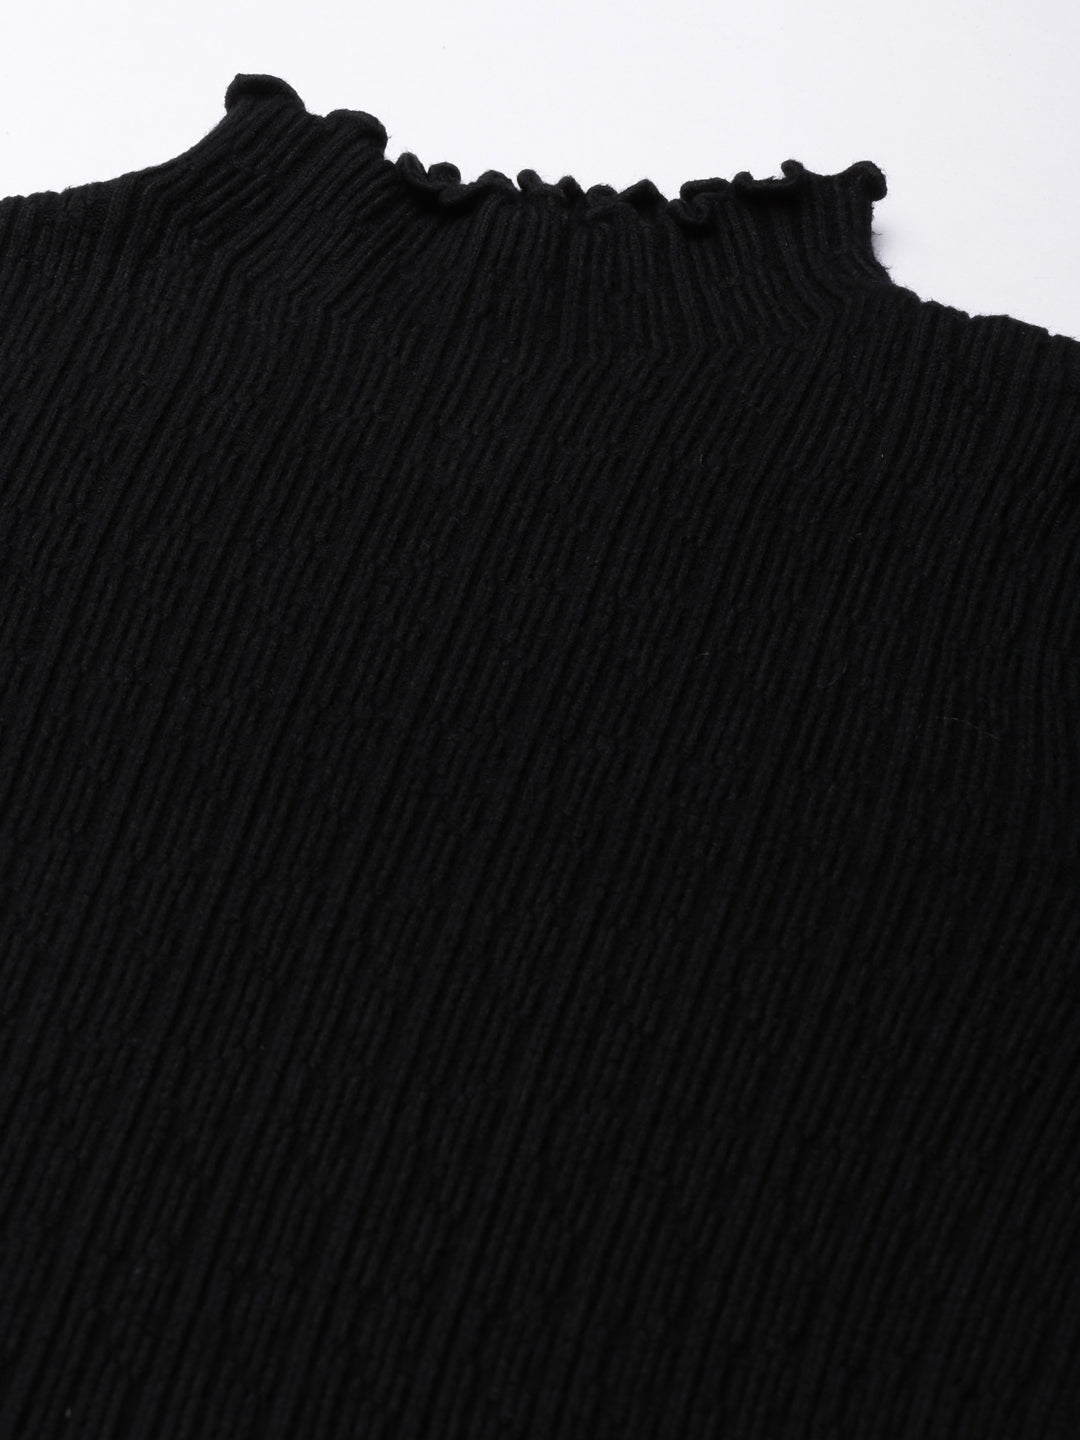 Women Black Solid Bodycon Dress